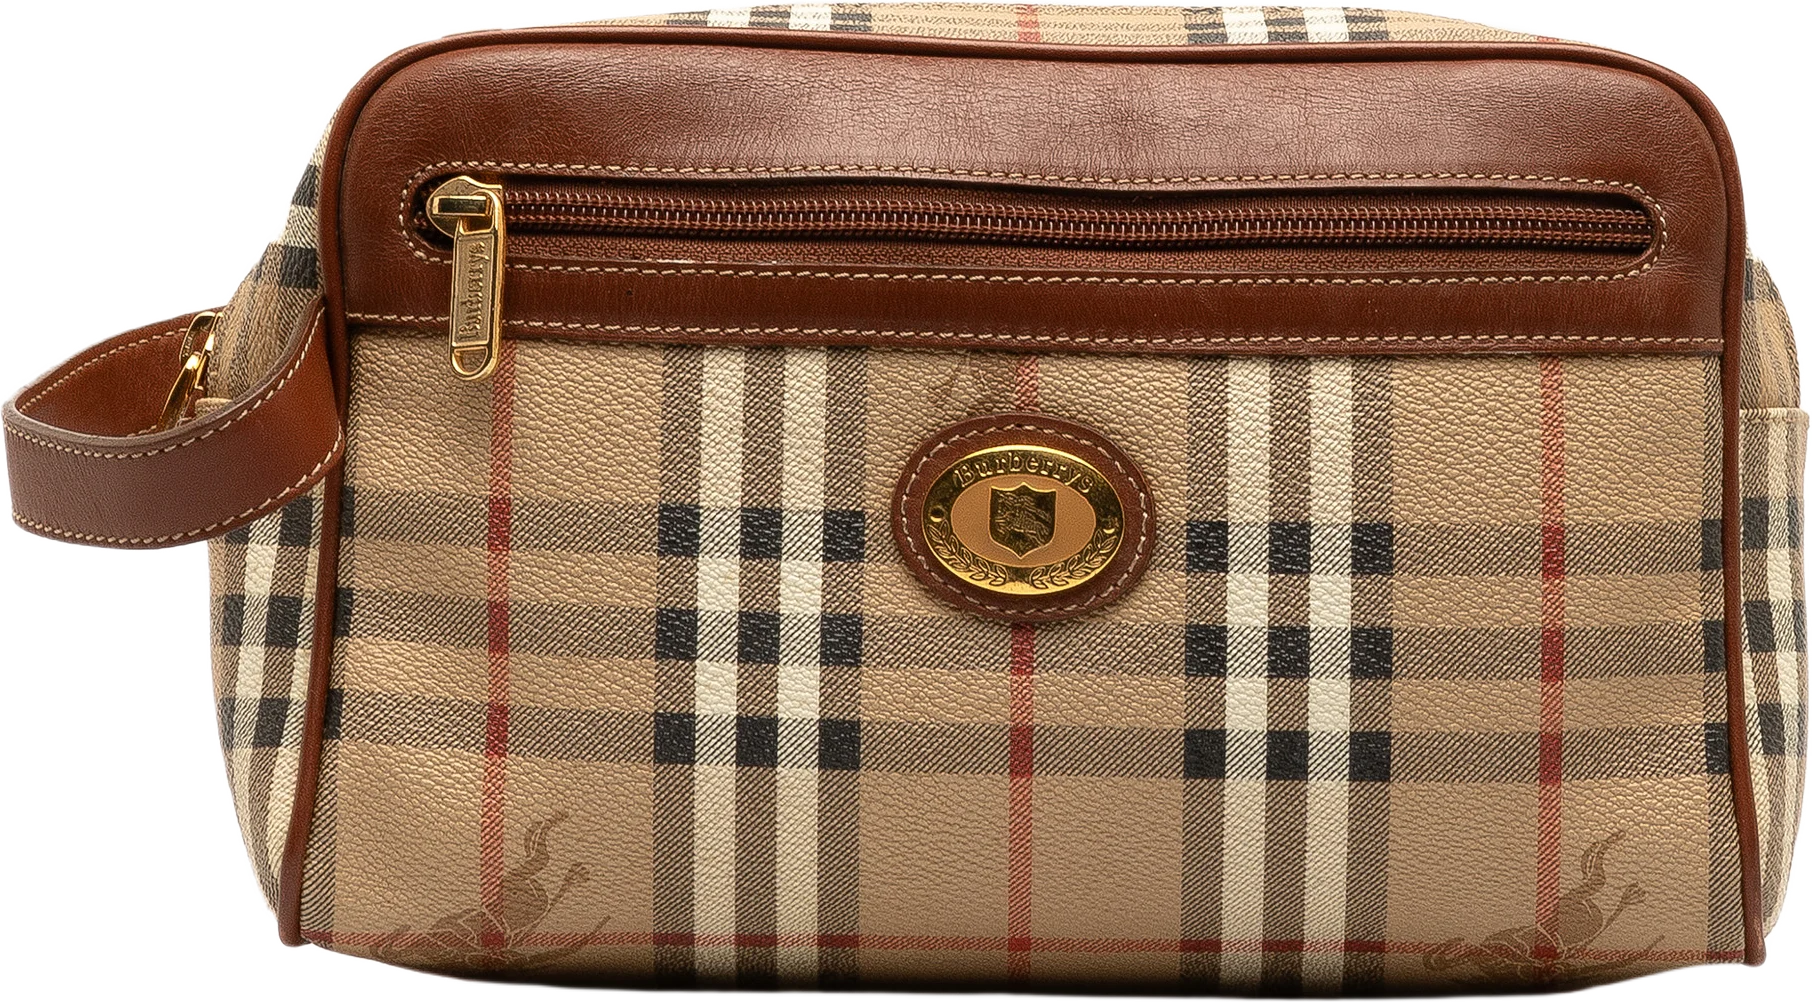 Burberry Haymarket Check Clutch Bag